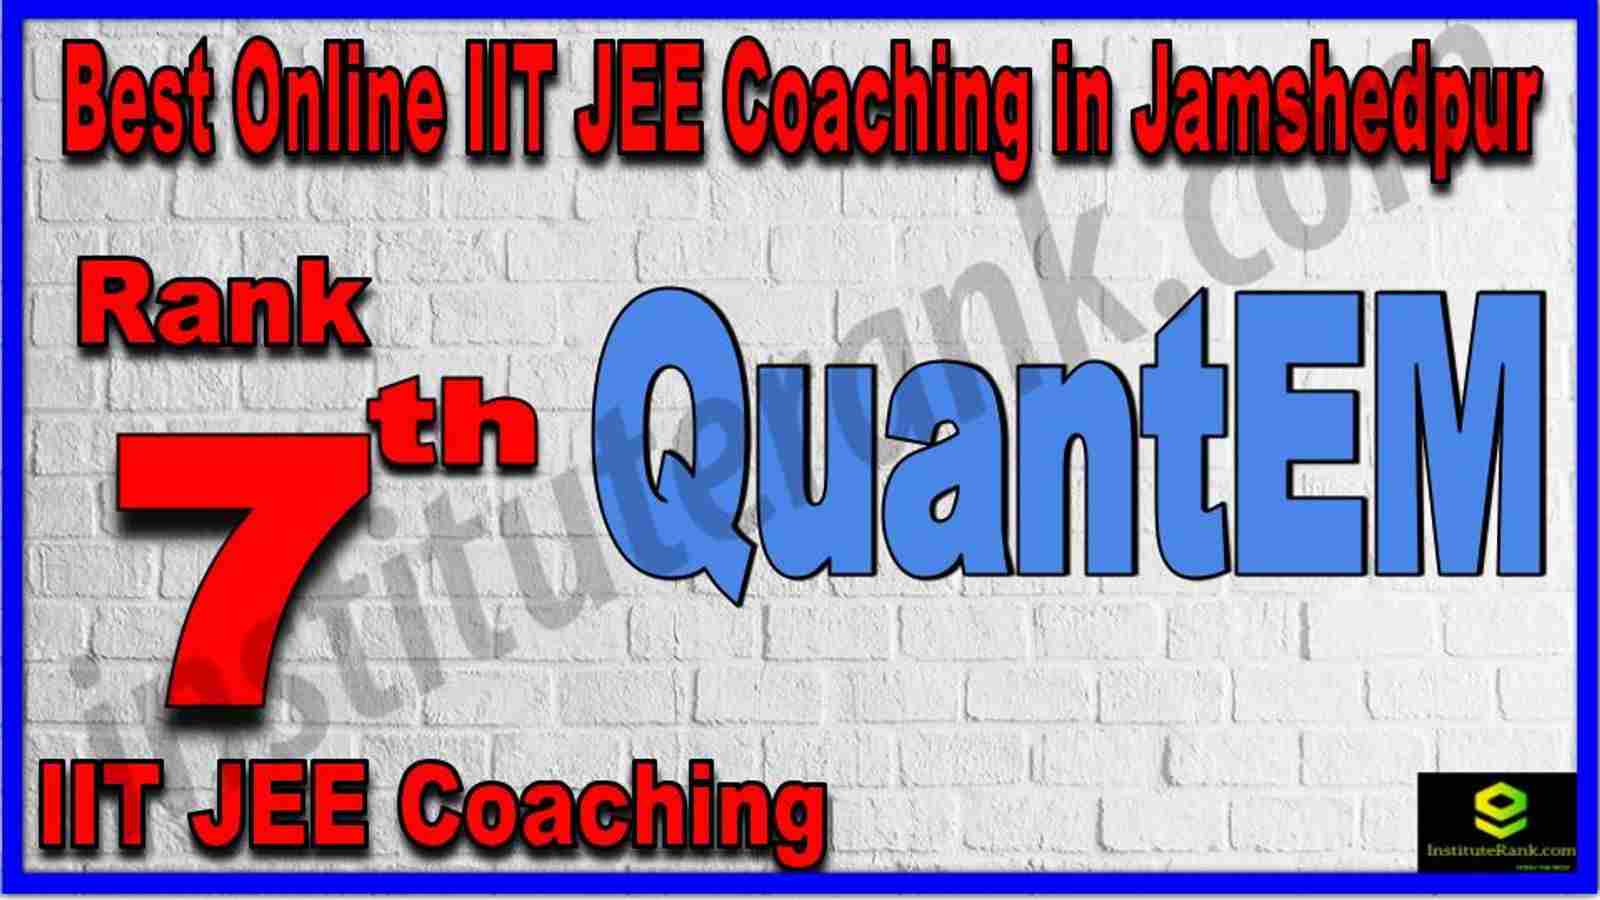 Rank 7th Best Online IIT JEE Coaching in Jamshedpur